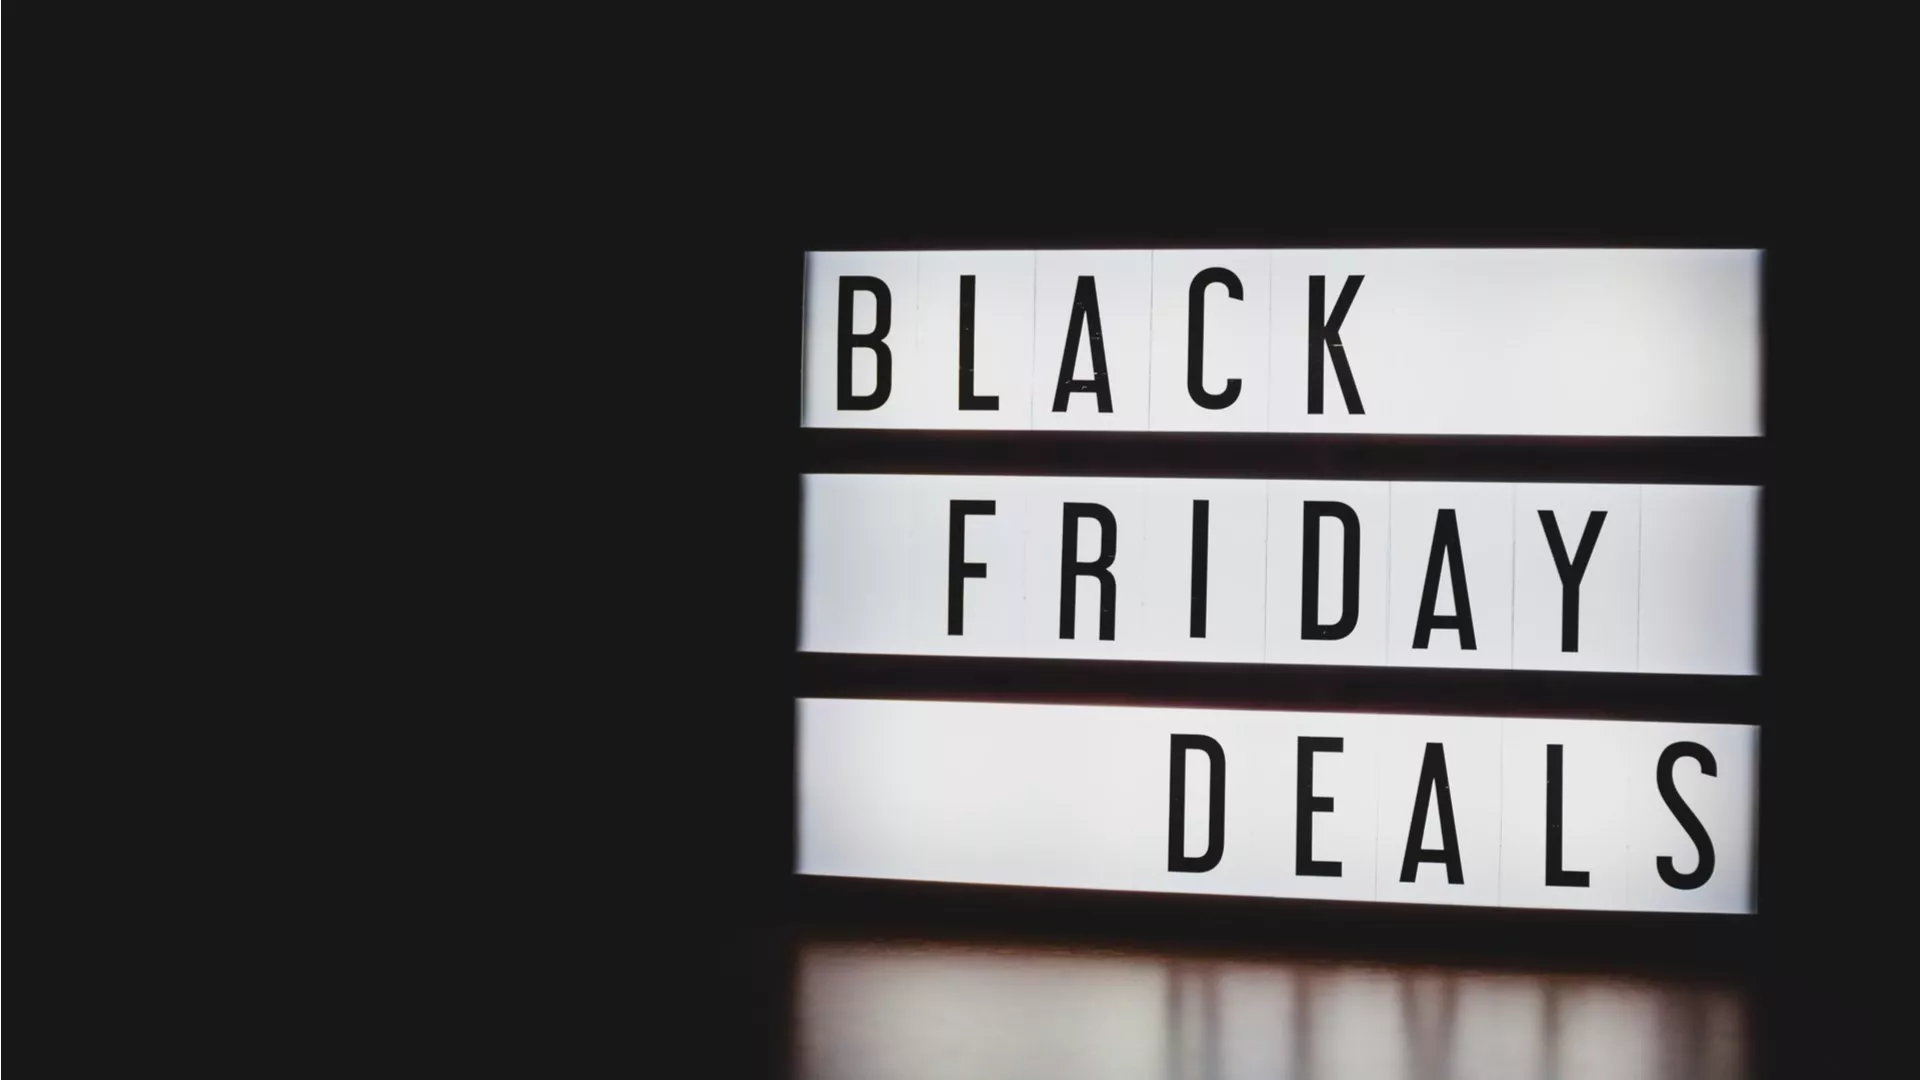 10 Best Black Friday Deals & Ads 2018 For Gadget Lovers
